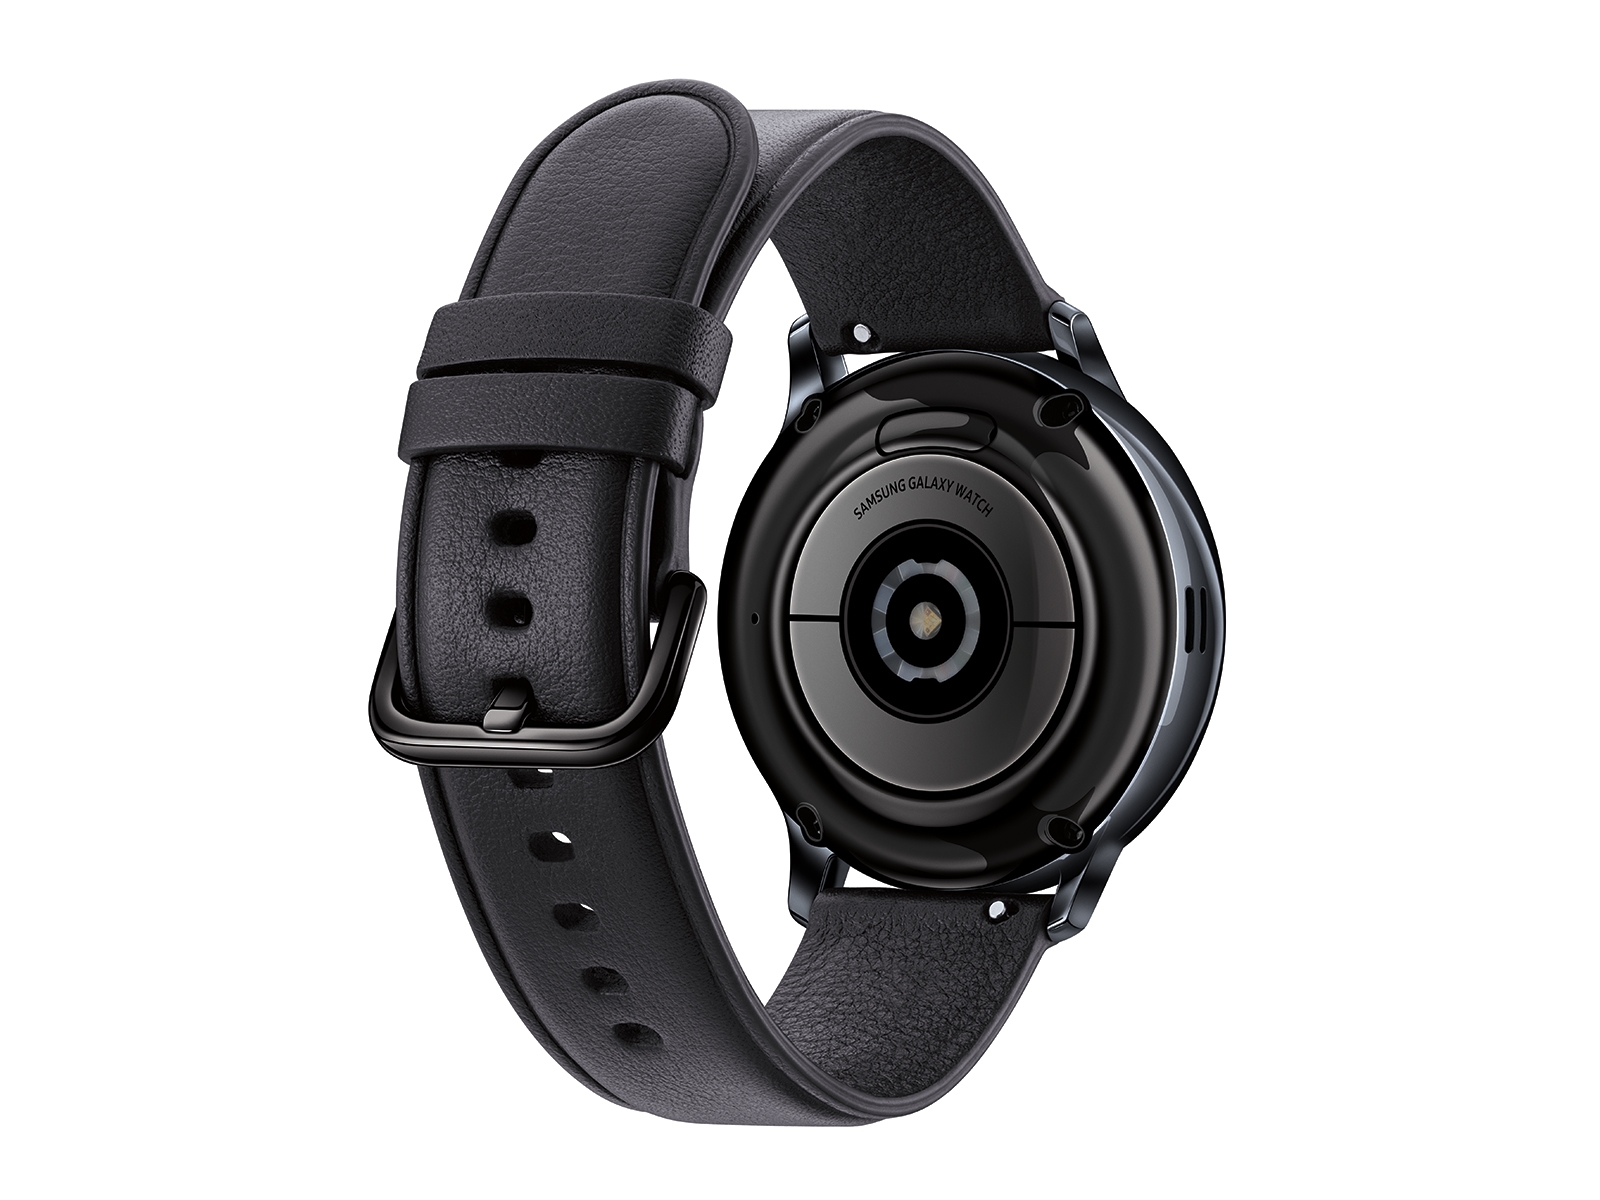 Galaxy Watch Active2 40mm Black LTE Wearables - SM-R835USKAXAR | Samsung US